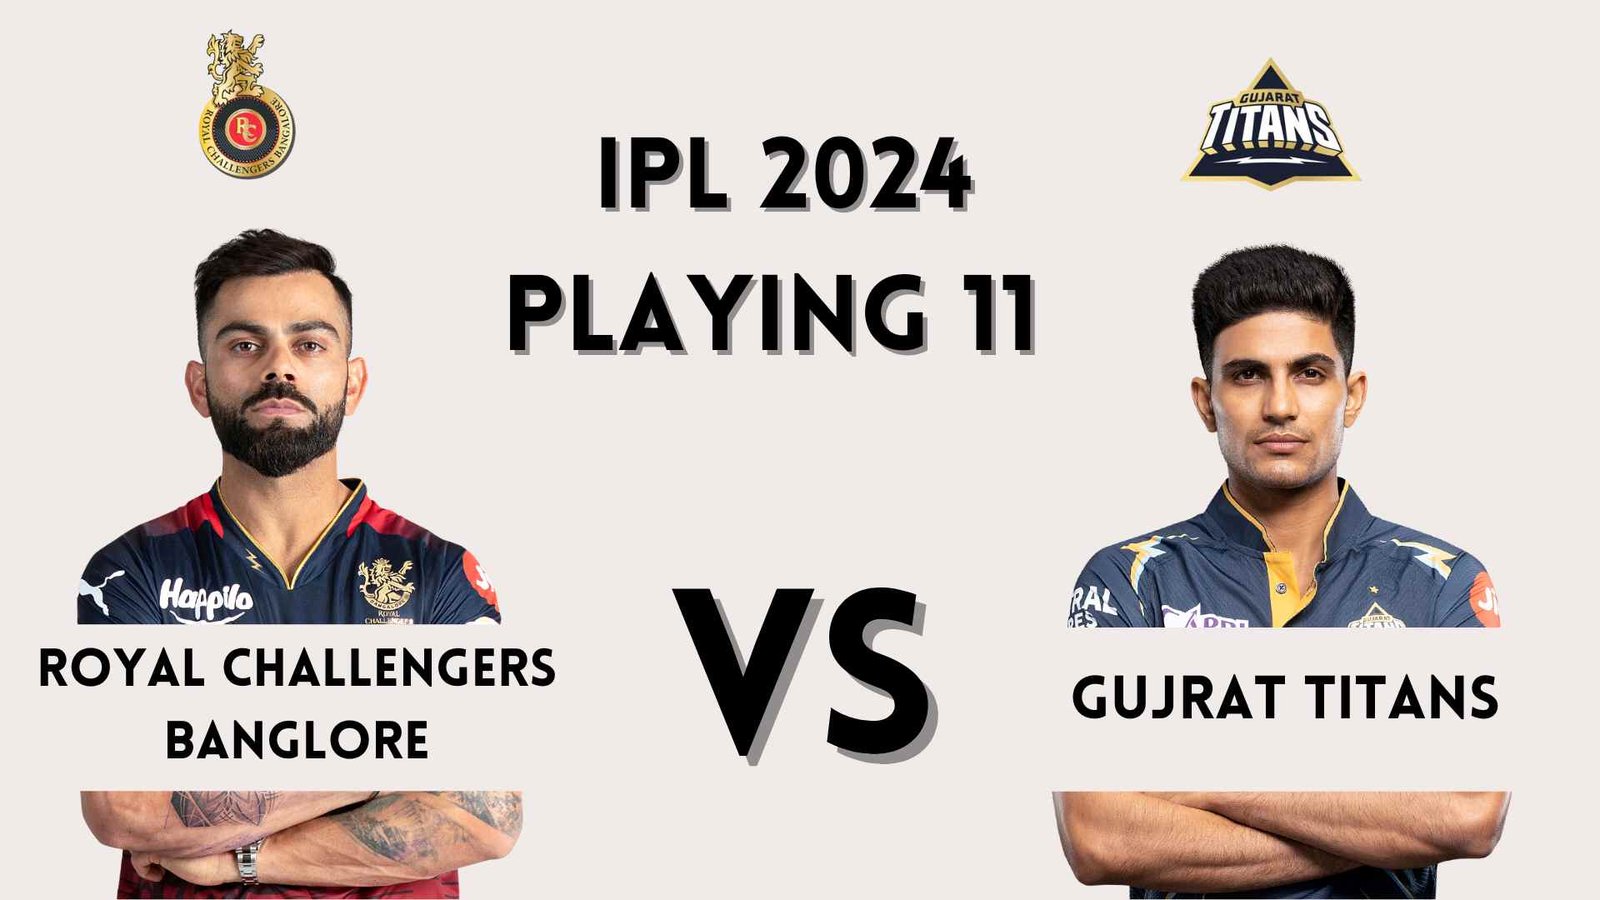 Rcb vs Gt playing 11 IPL 2024 कब और कहा खेला जायेगा?